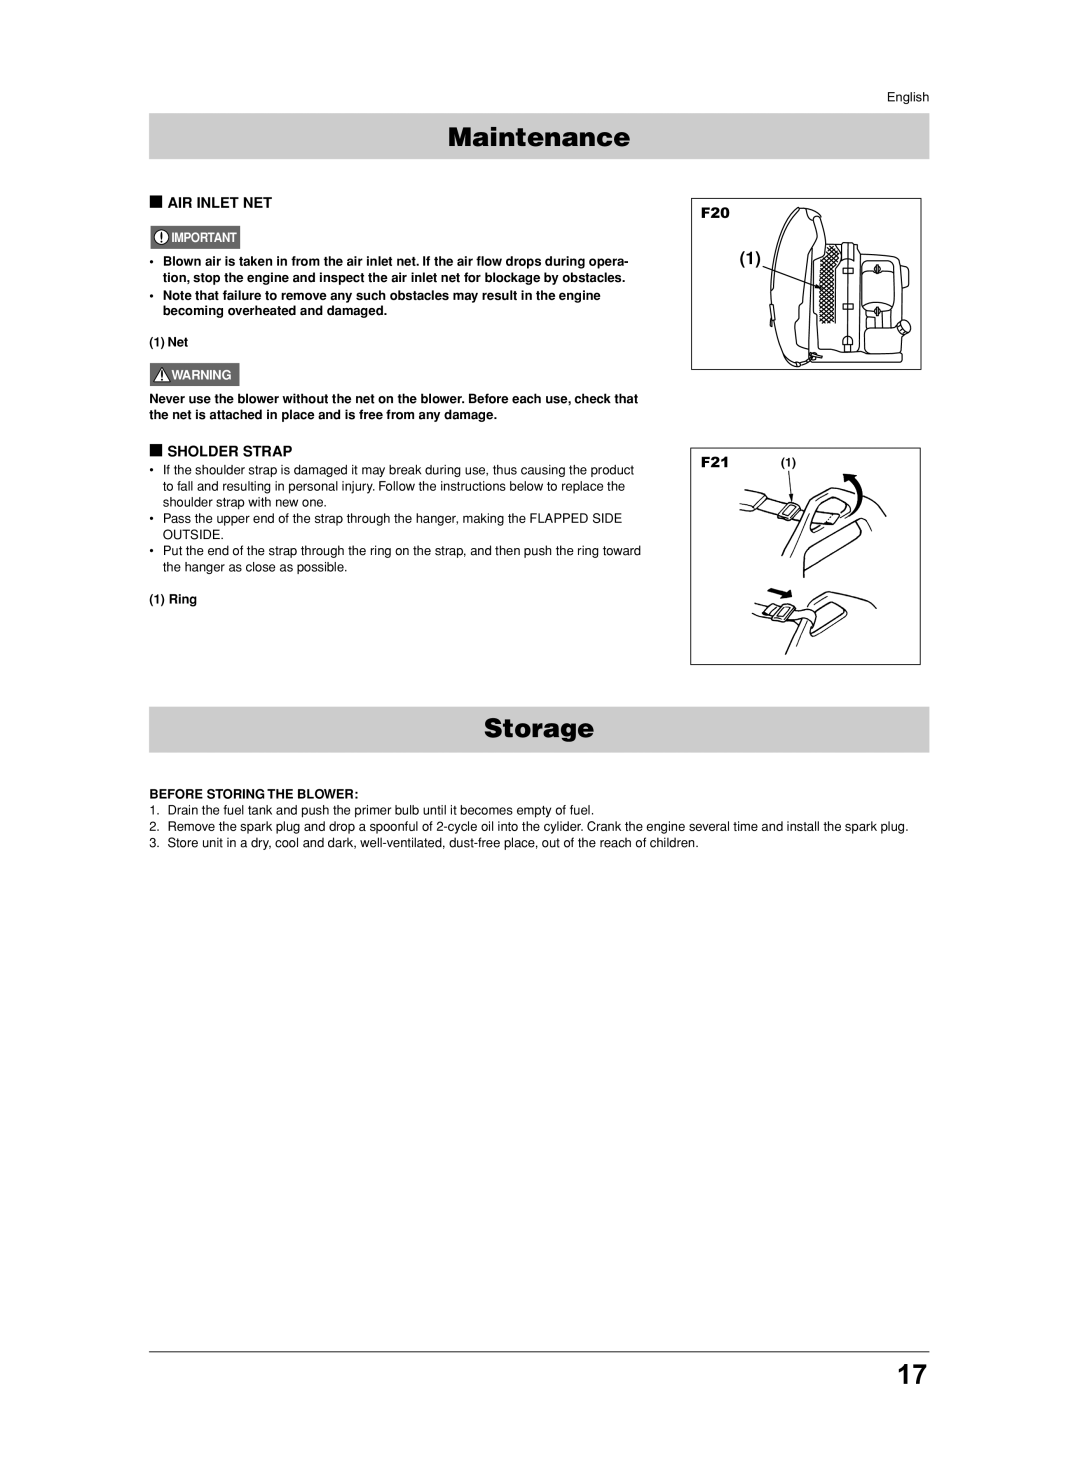 Jonsered BB2250 manual Storage, Air Inlet Net, Sholder Strap, Maintenance 